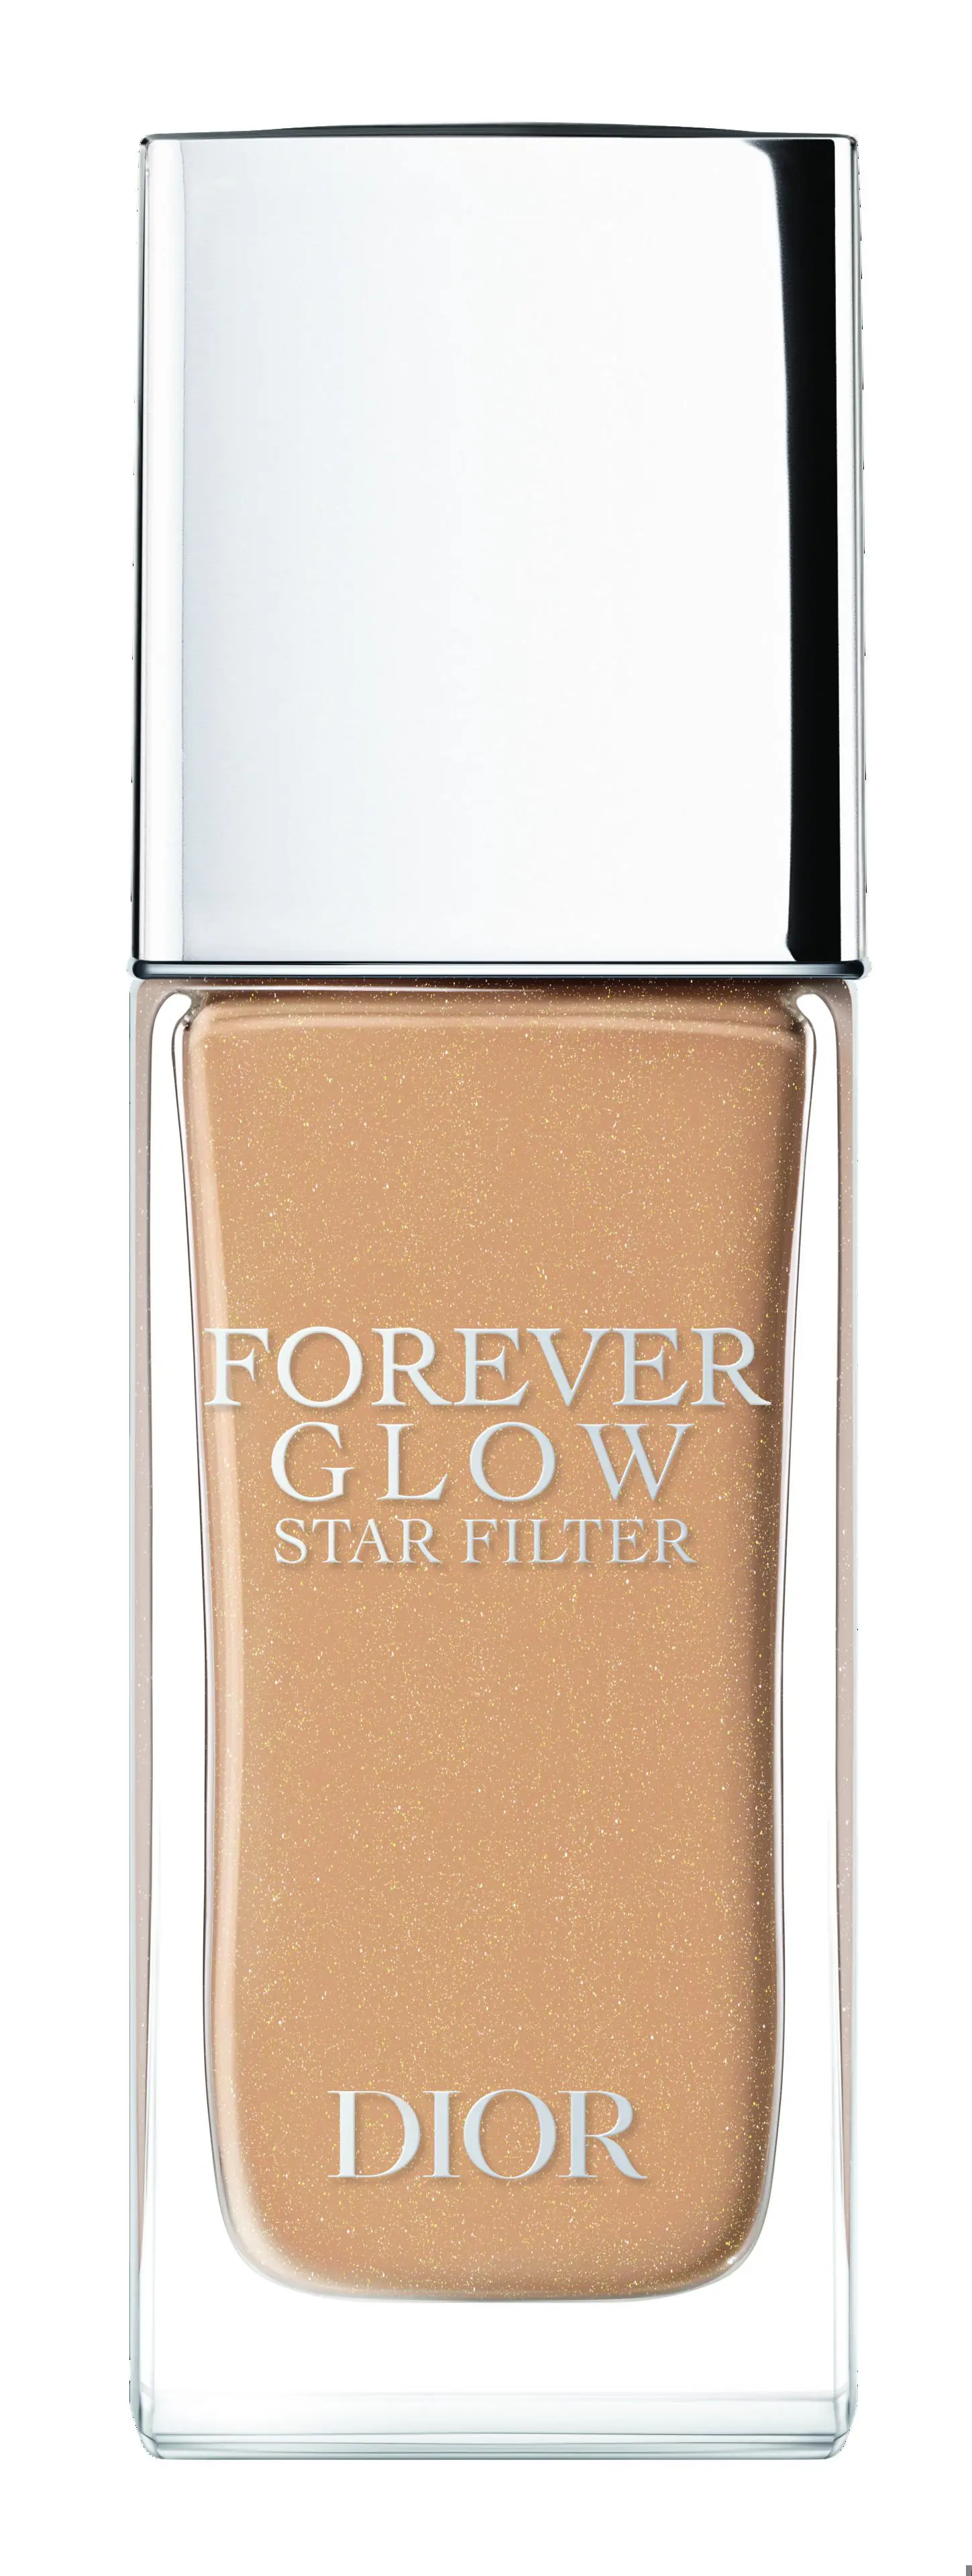 Forever Glow Star Filter de Dior (54 €).